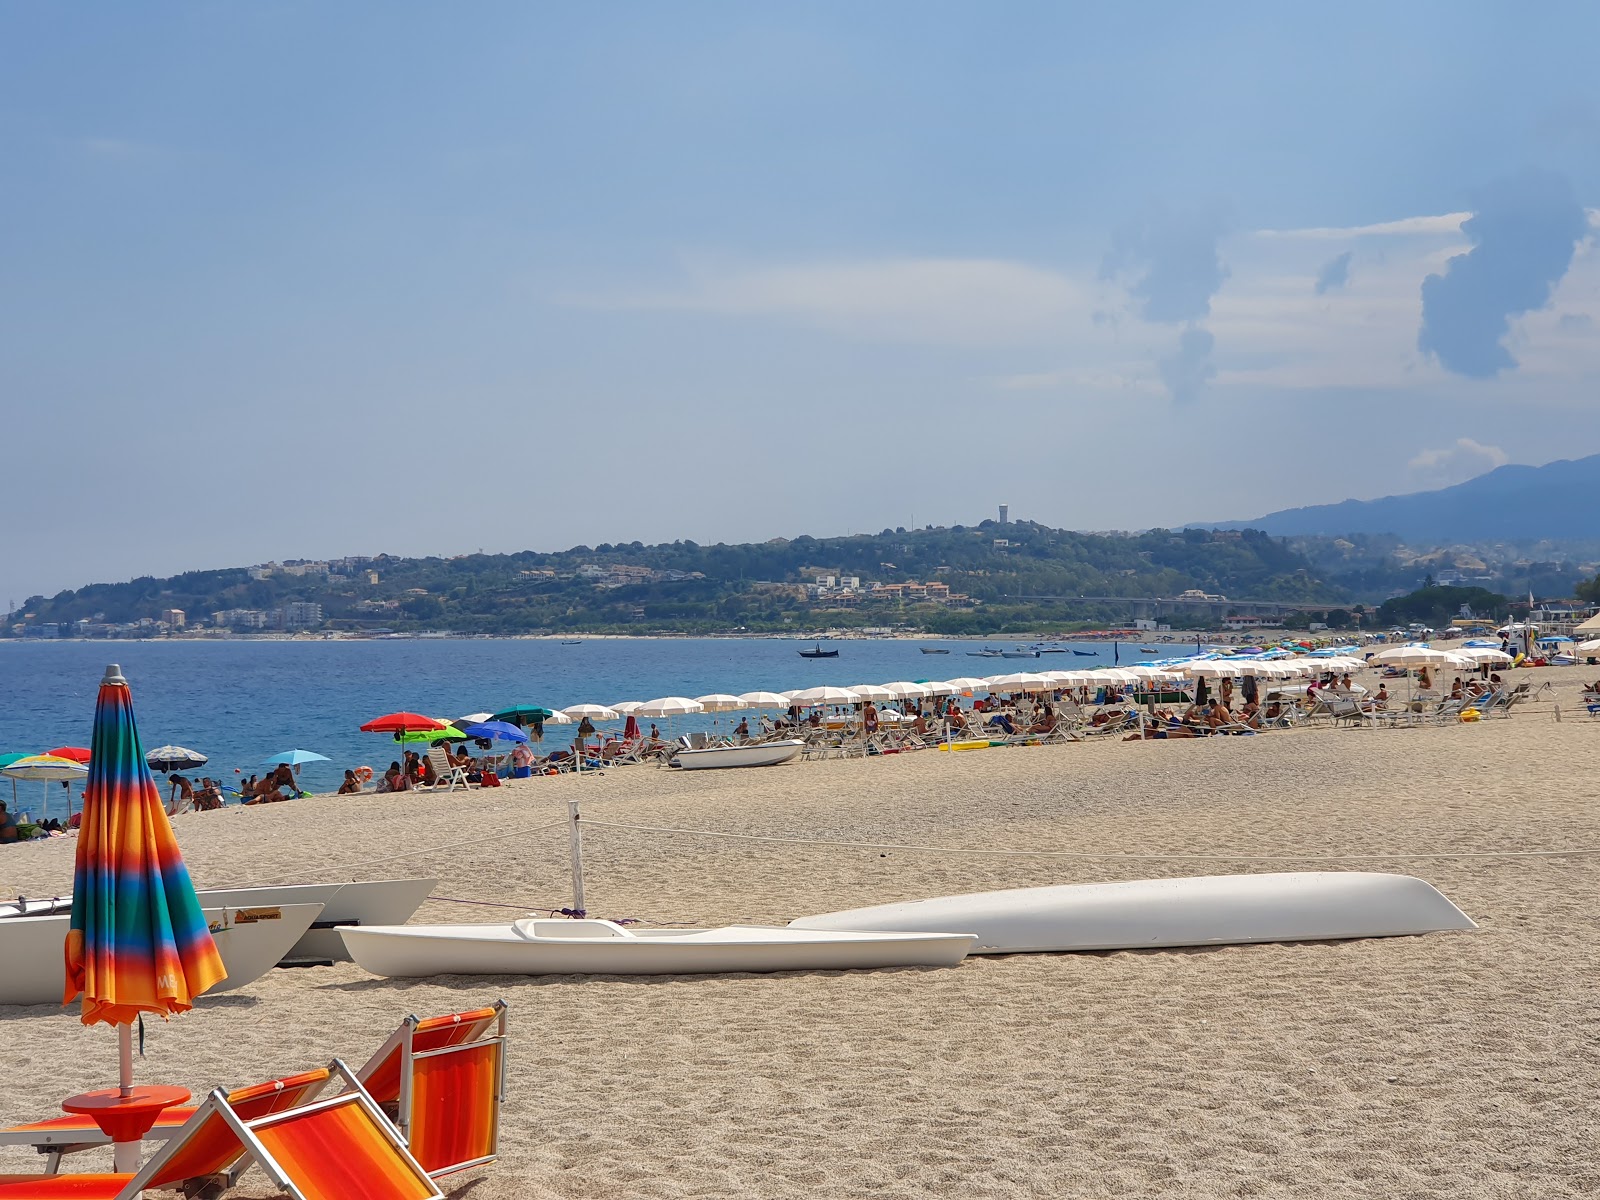 Foto de Praia de Montepaone Lido - lugar popular entre os apreciadores de relaxamento